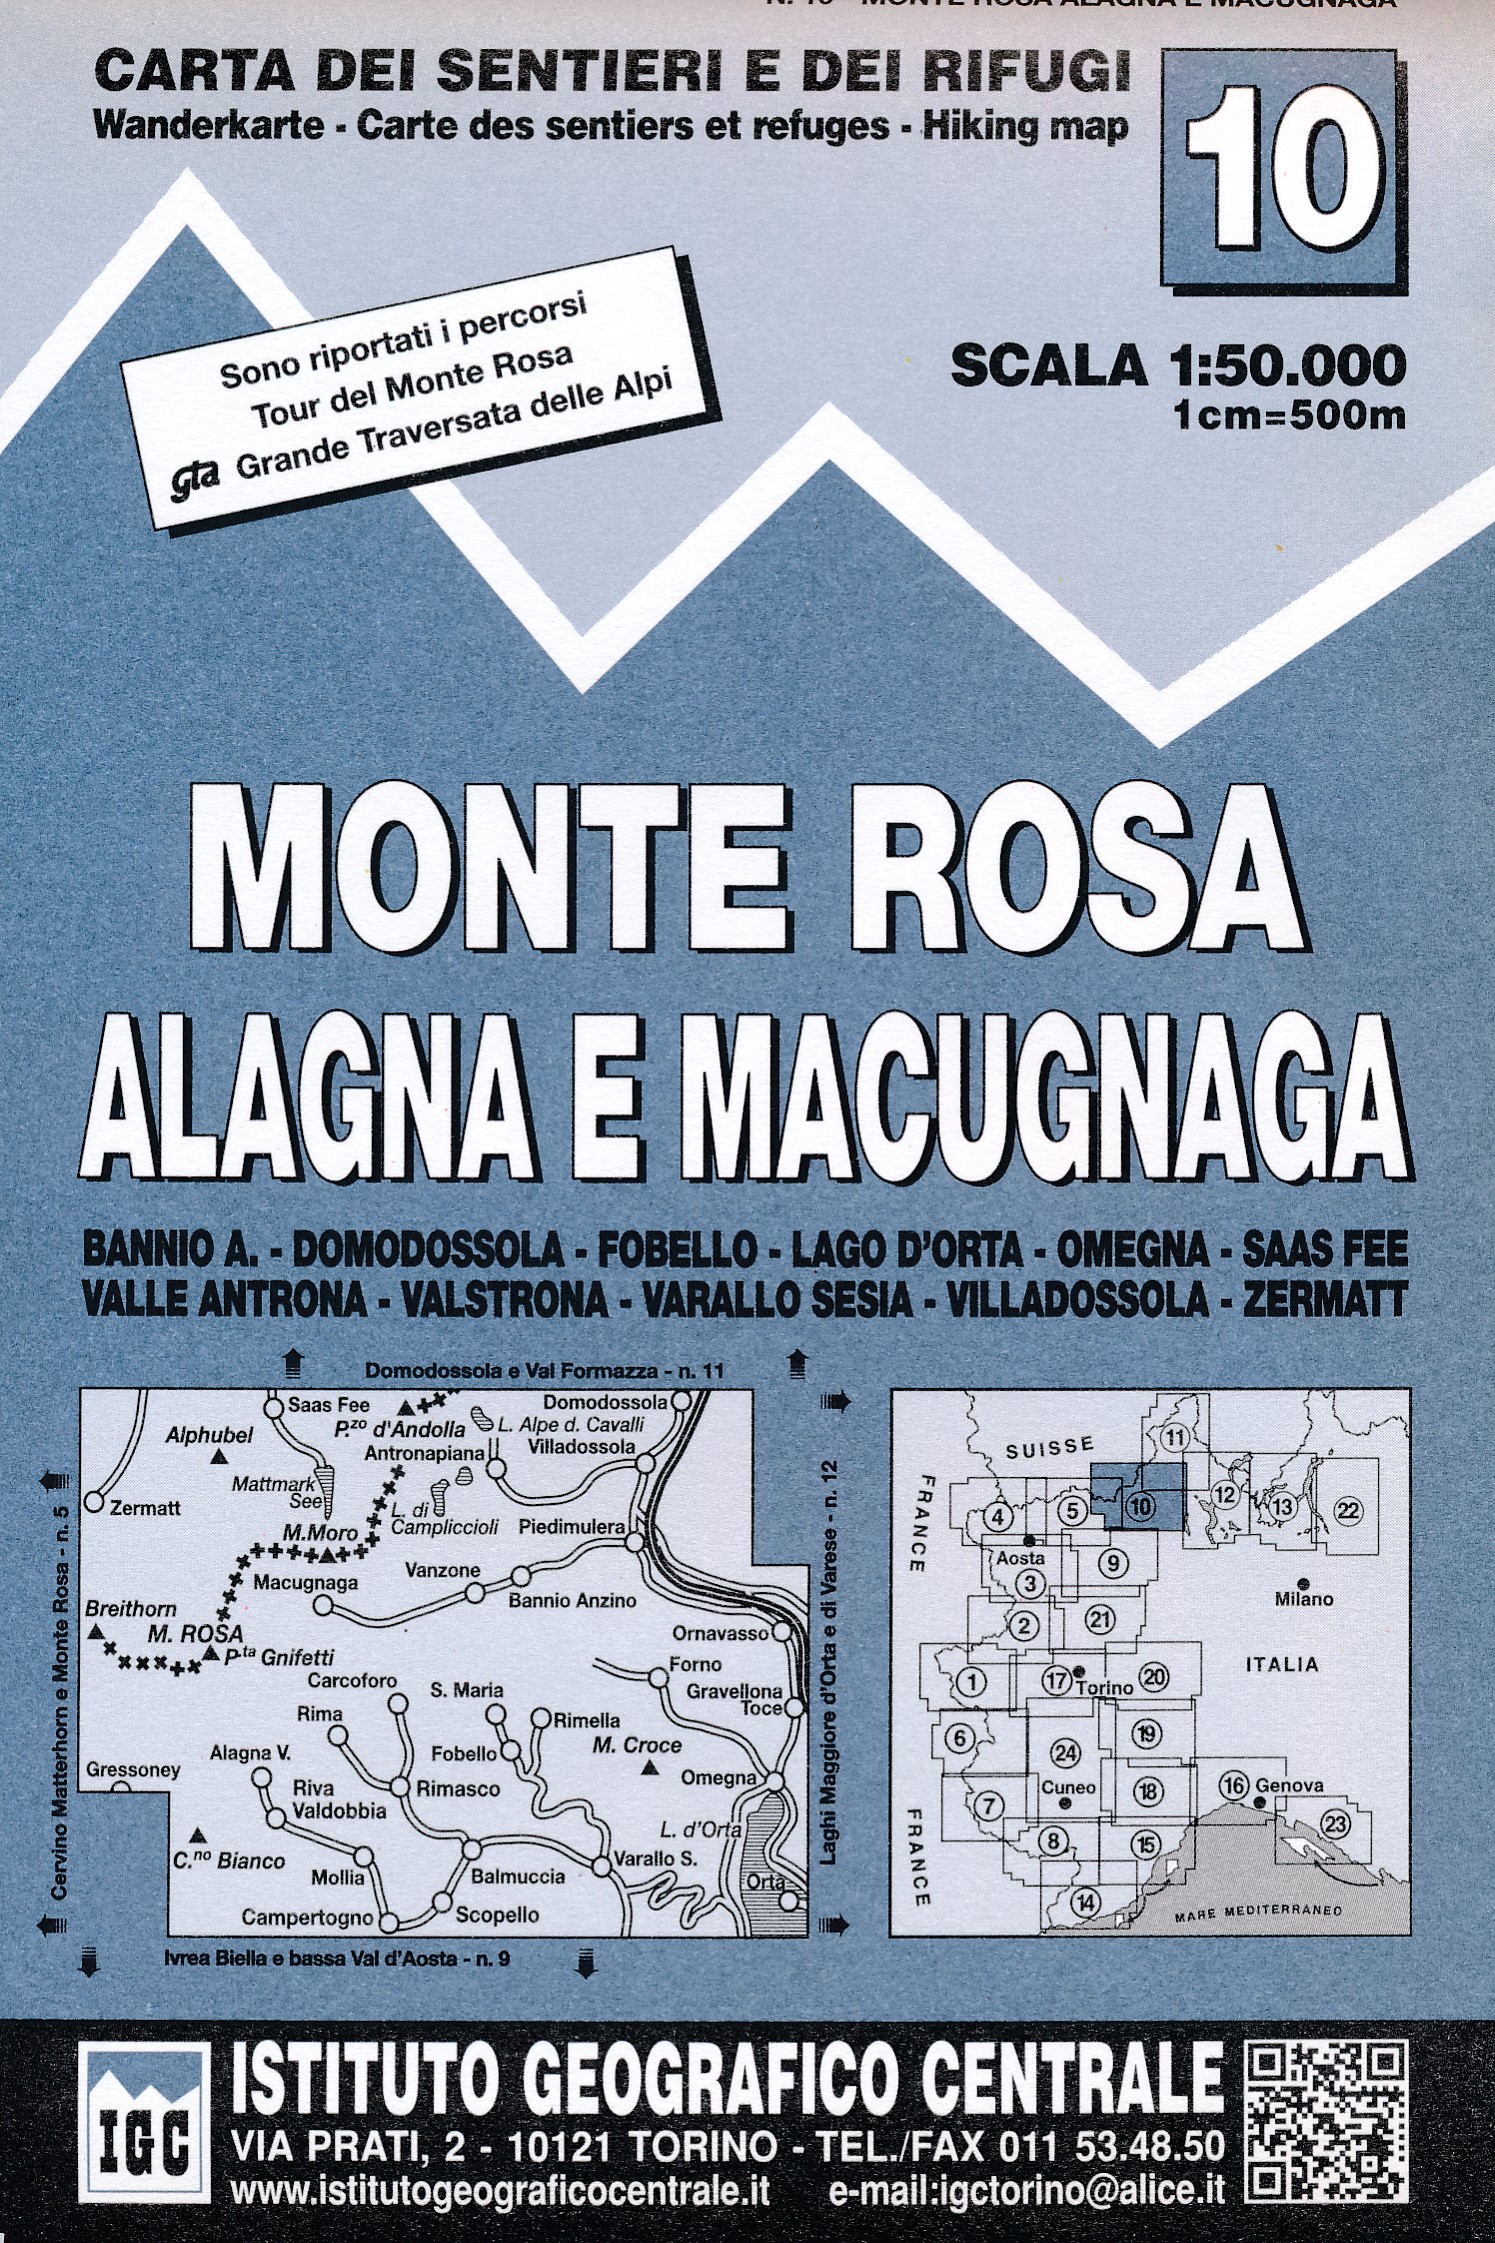 Online bestellen: Wandelkaart 10 Monte Rosa, Alagna e Macugnaga | IGC - Istituto Geografico Centrale